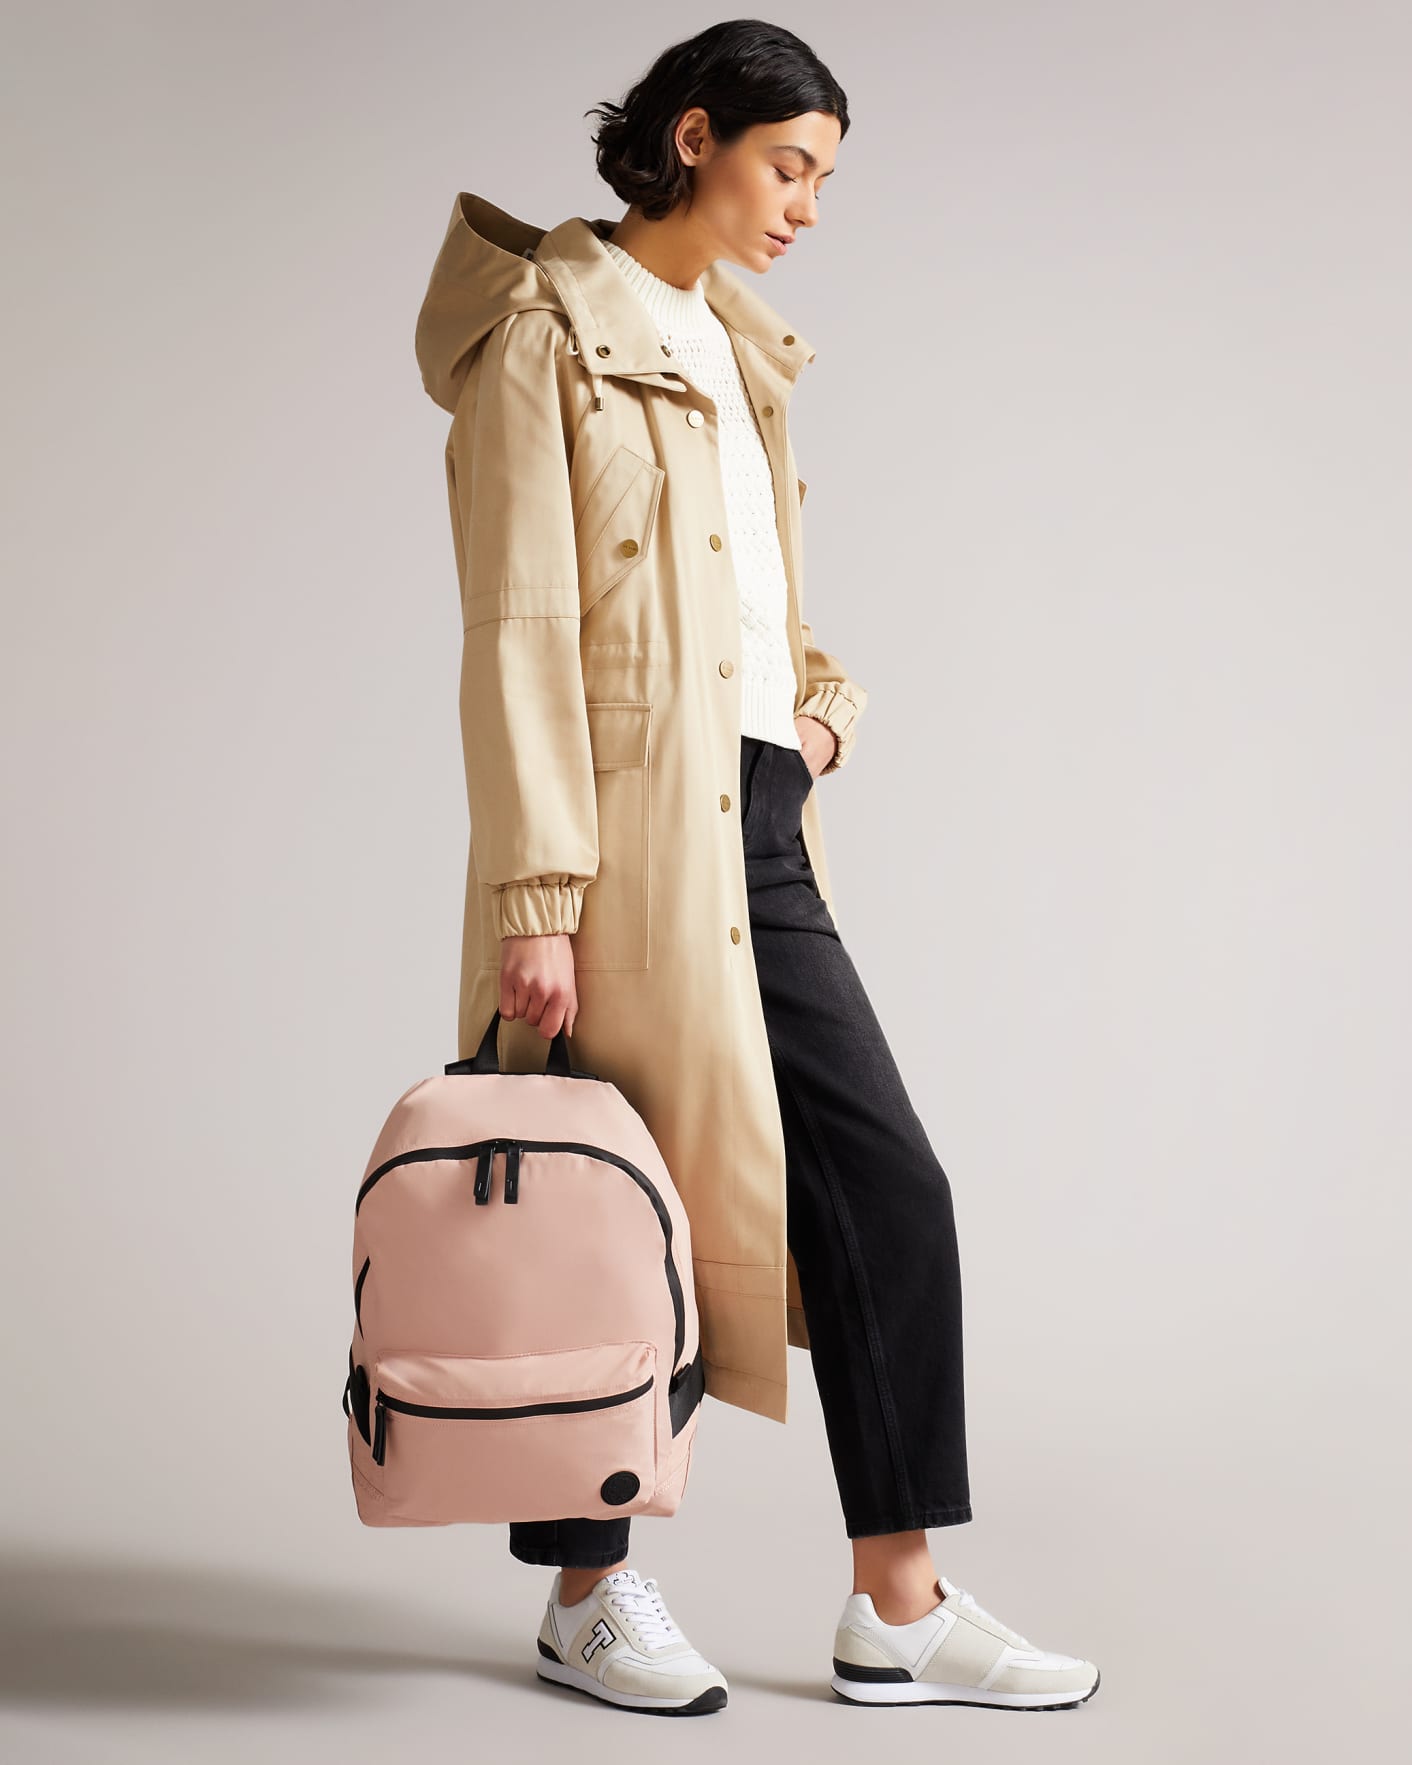 Pale Pink Foldaway Backpack Ted Baker